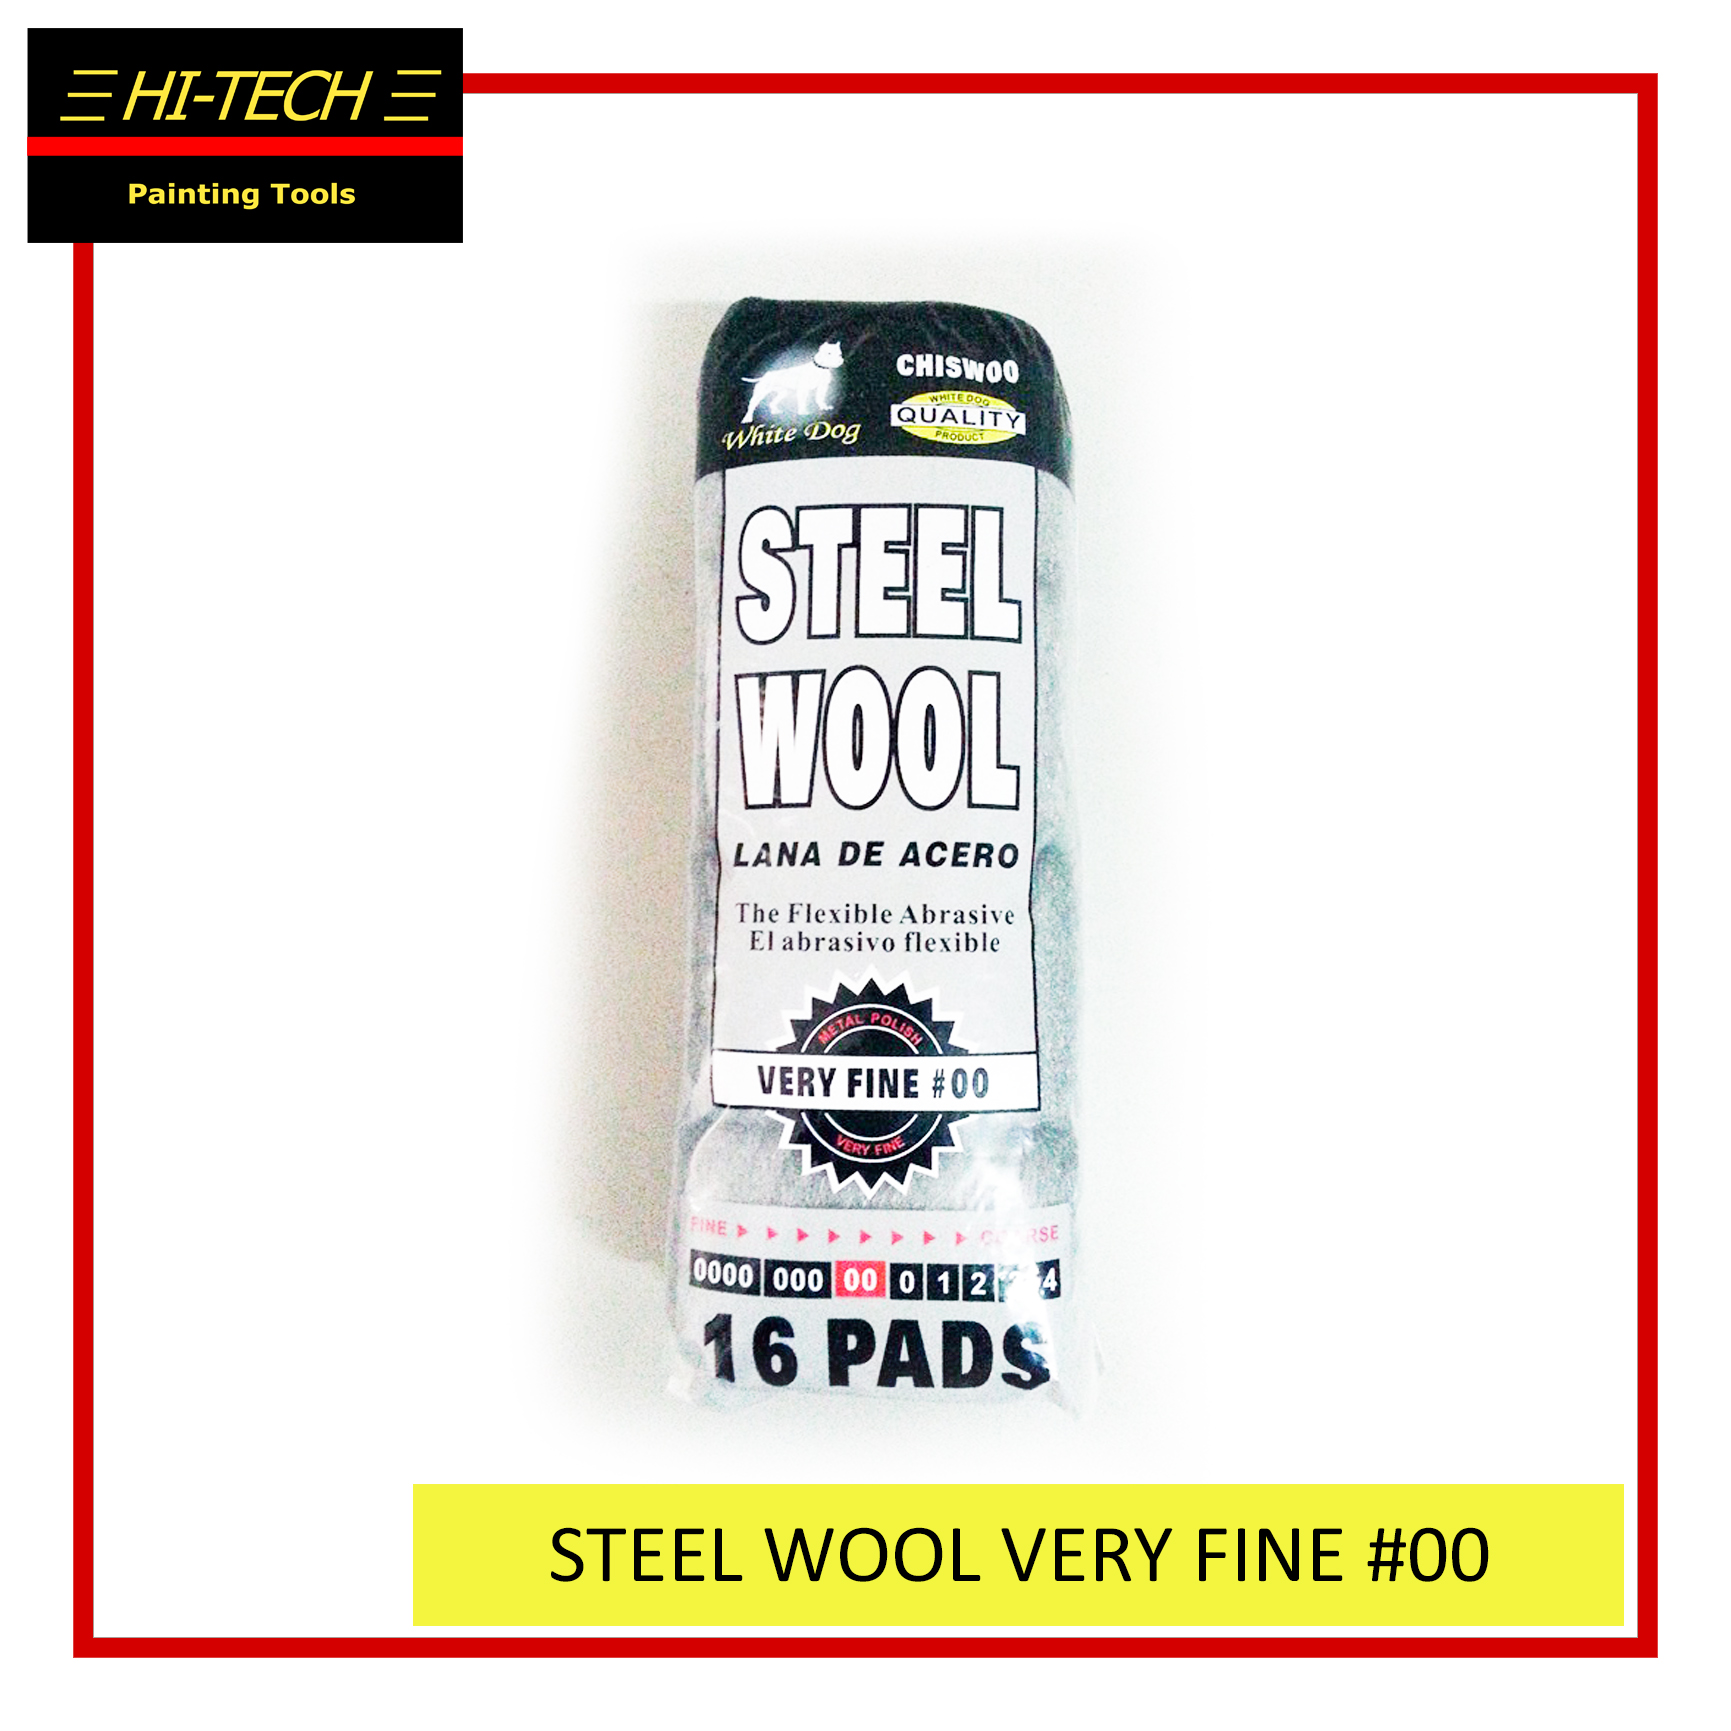 00 Very Fine Red Devil 0312 Steel Wool 16 Pads 